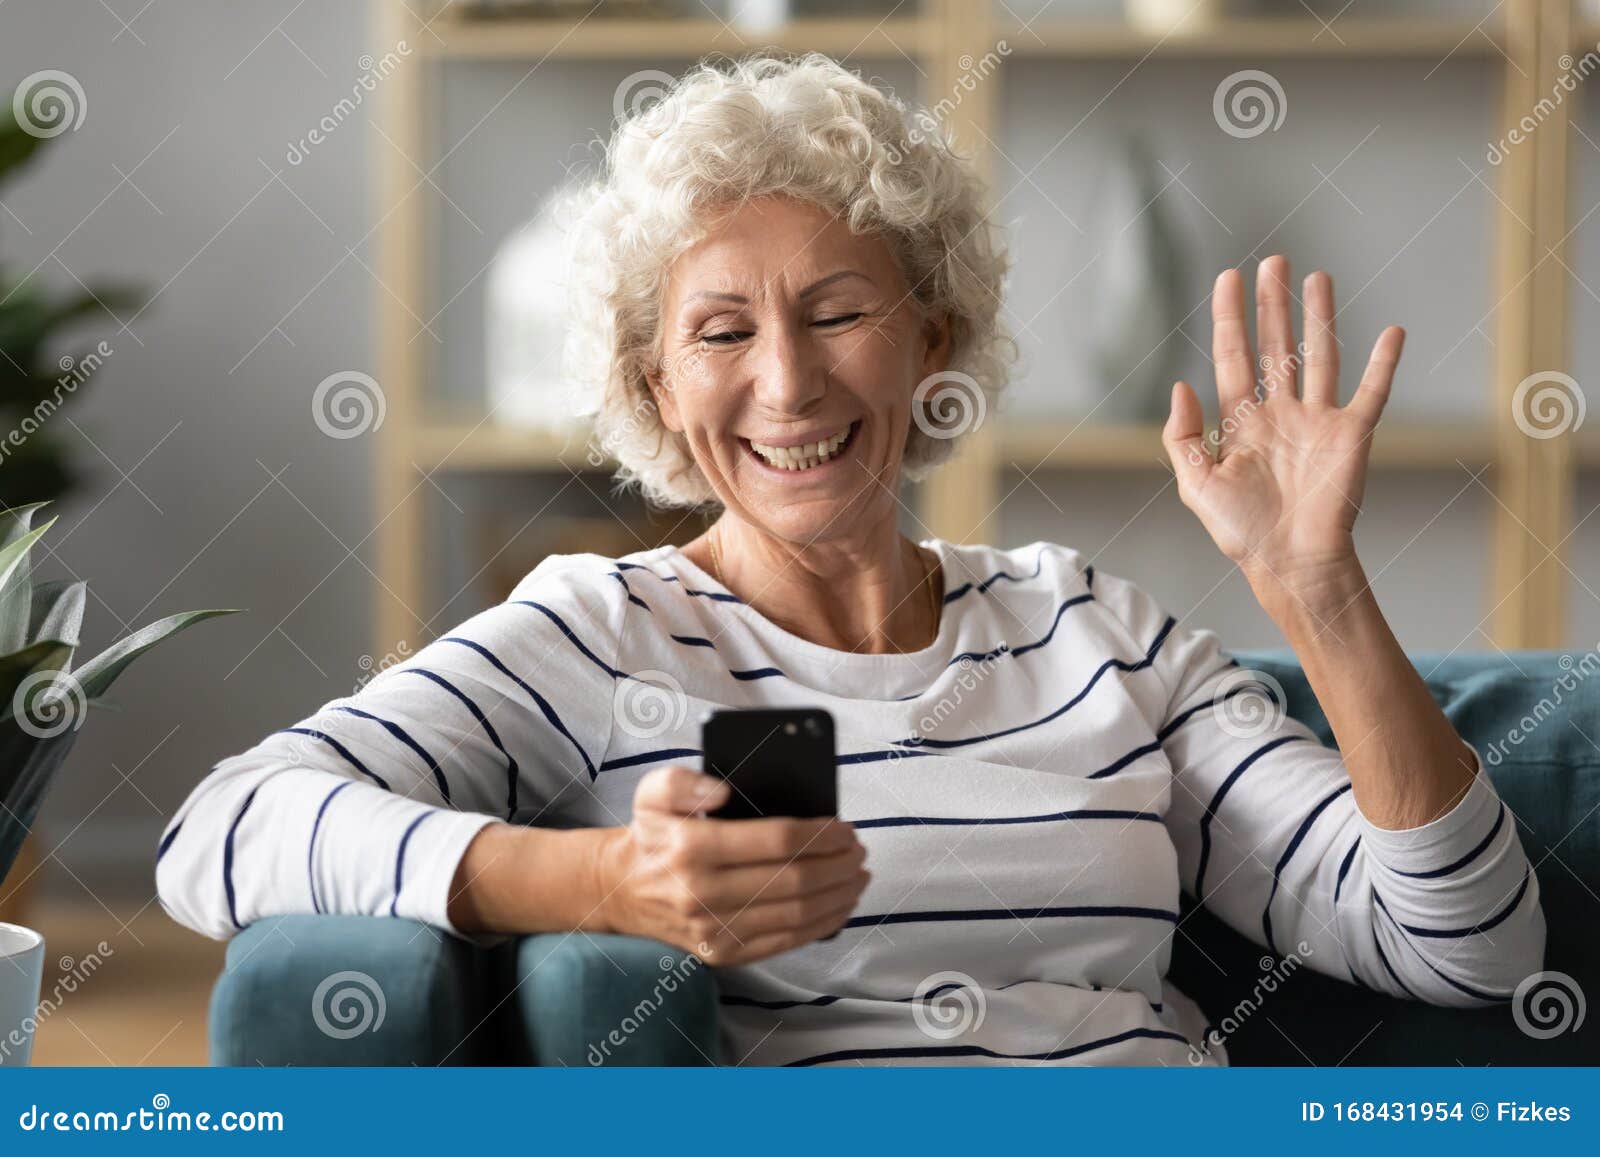 elderly woman holding smartphone wave hand having videocall